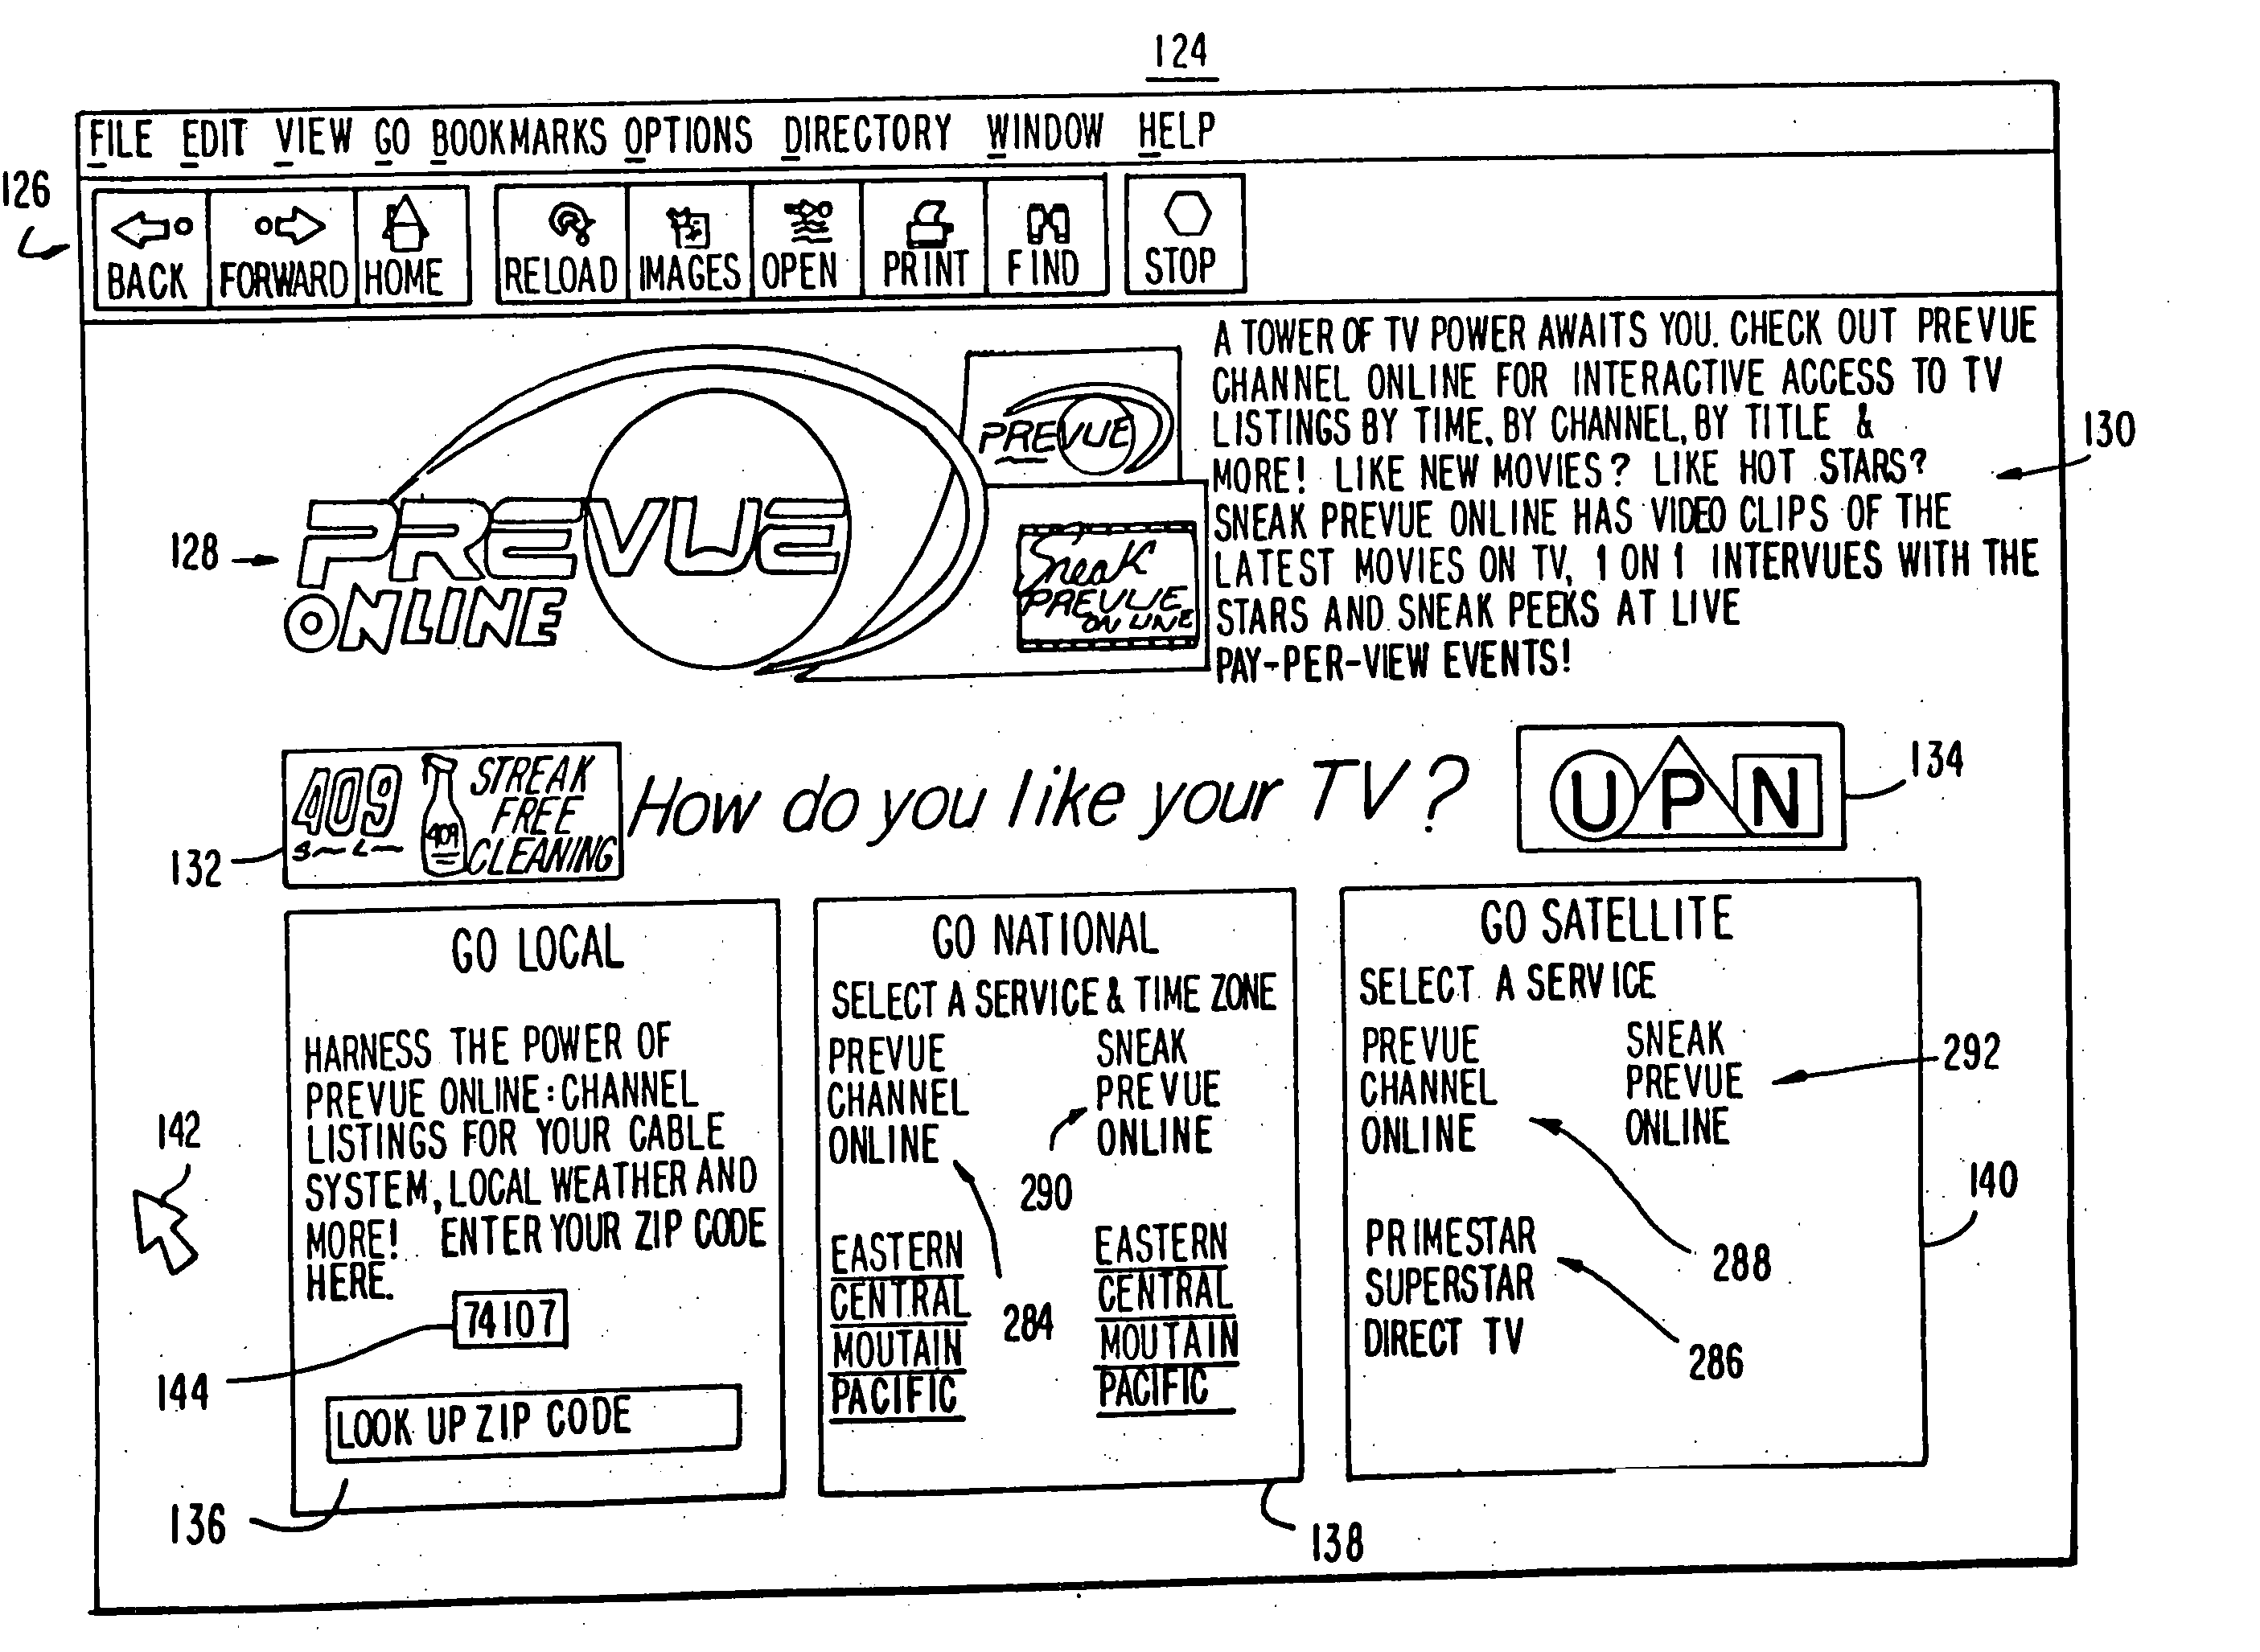 Internet television program guide system